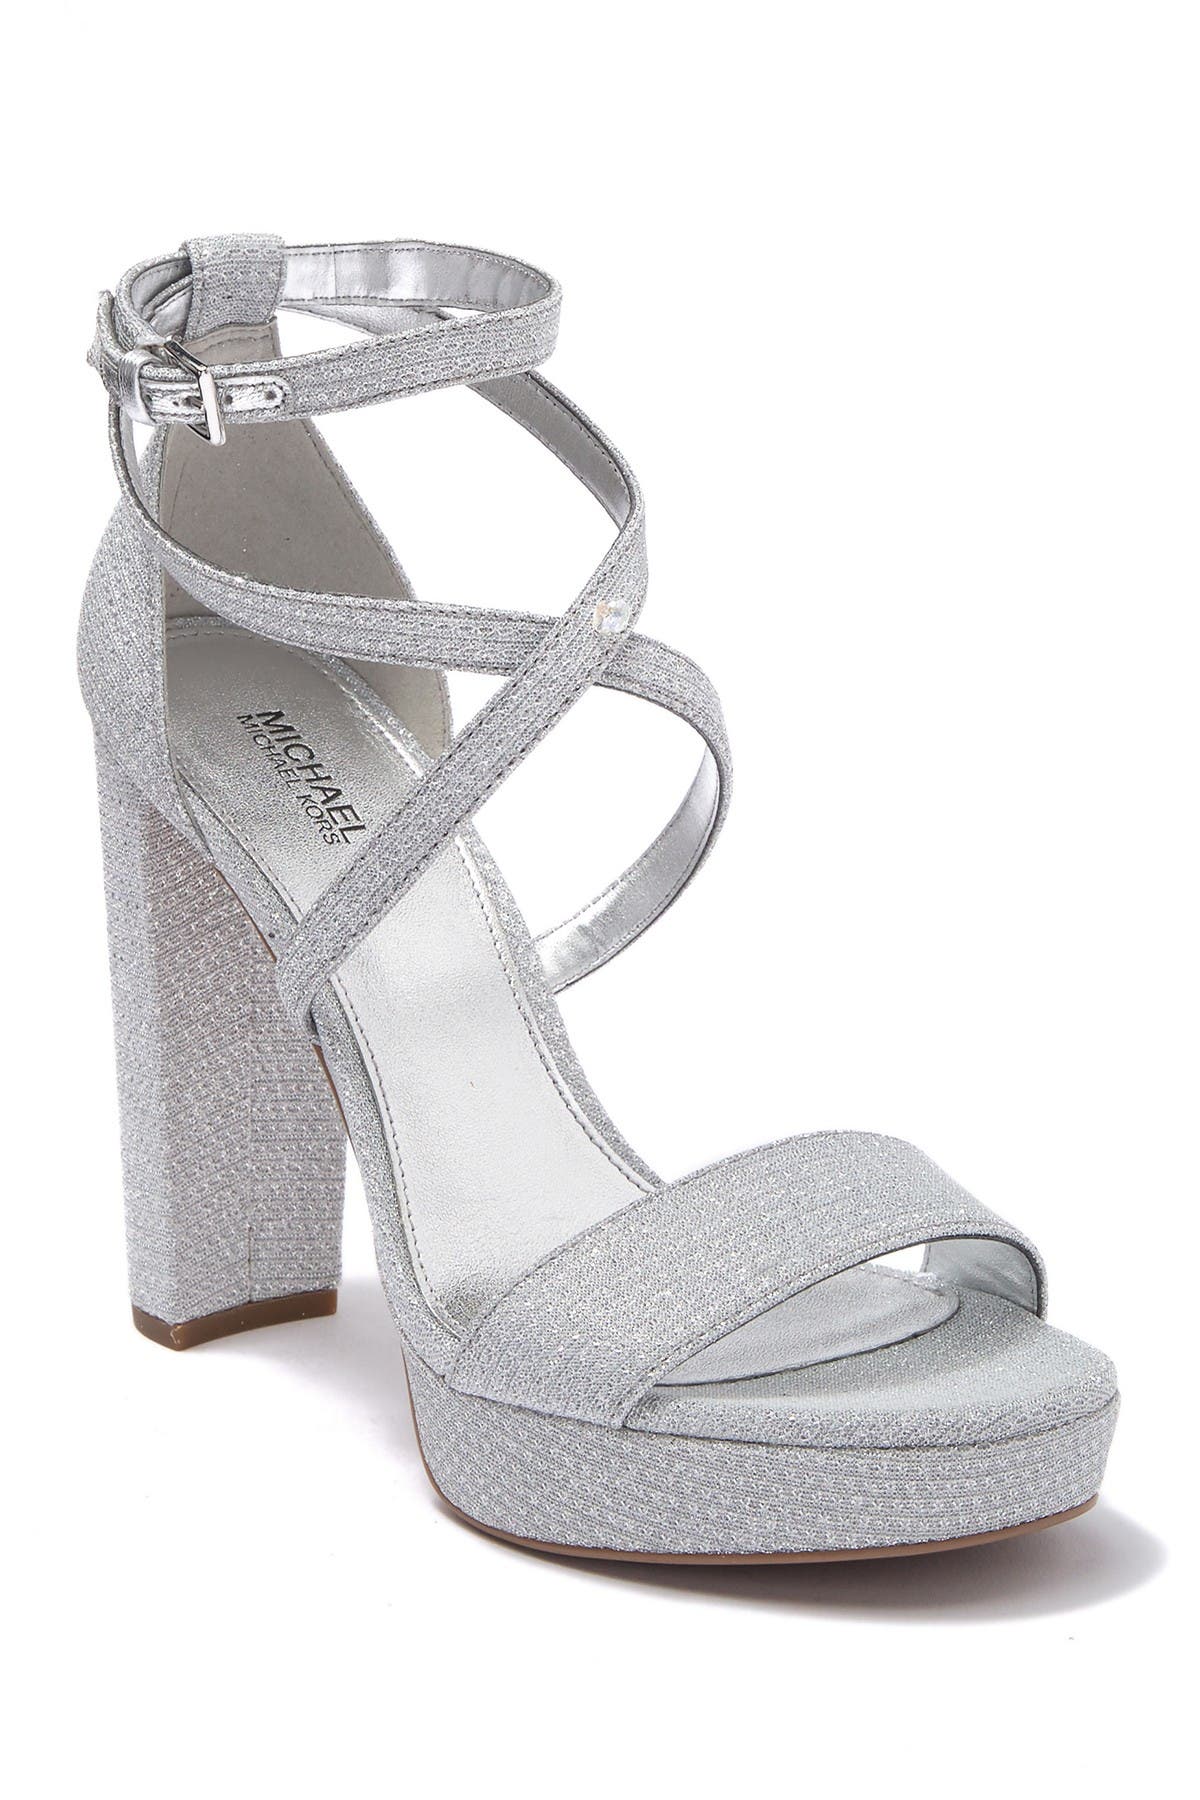 silver strappy platform heels